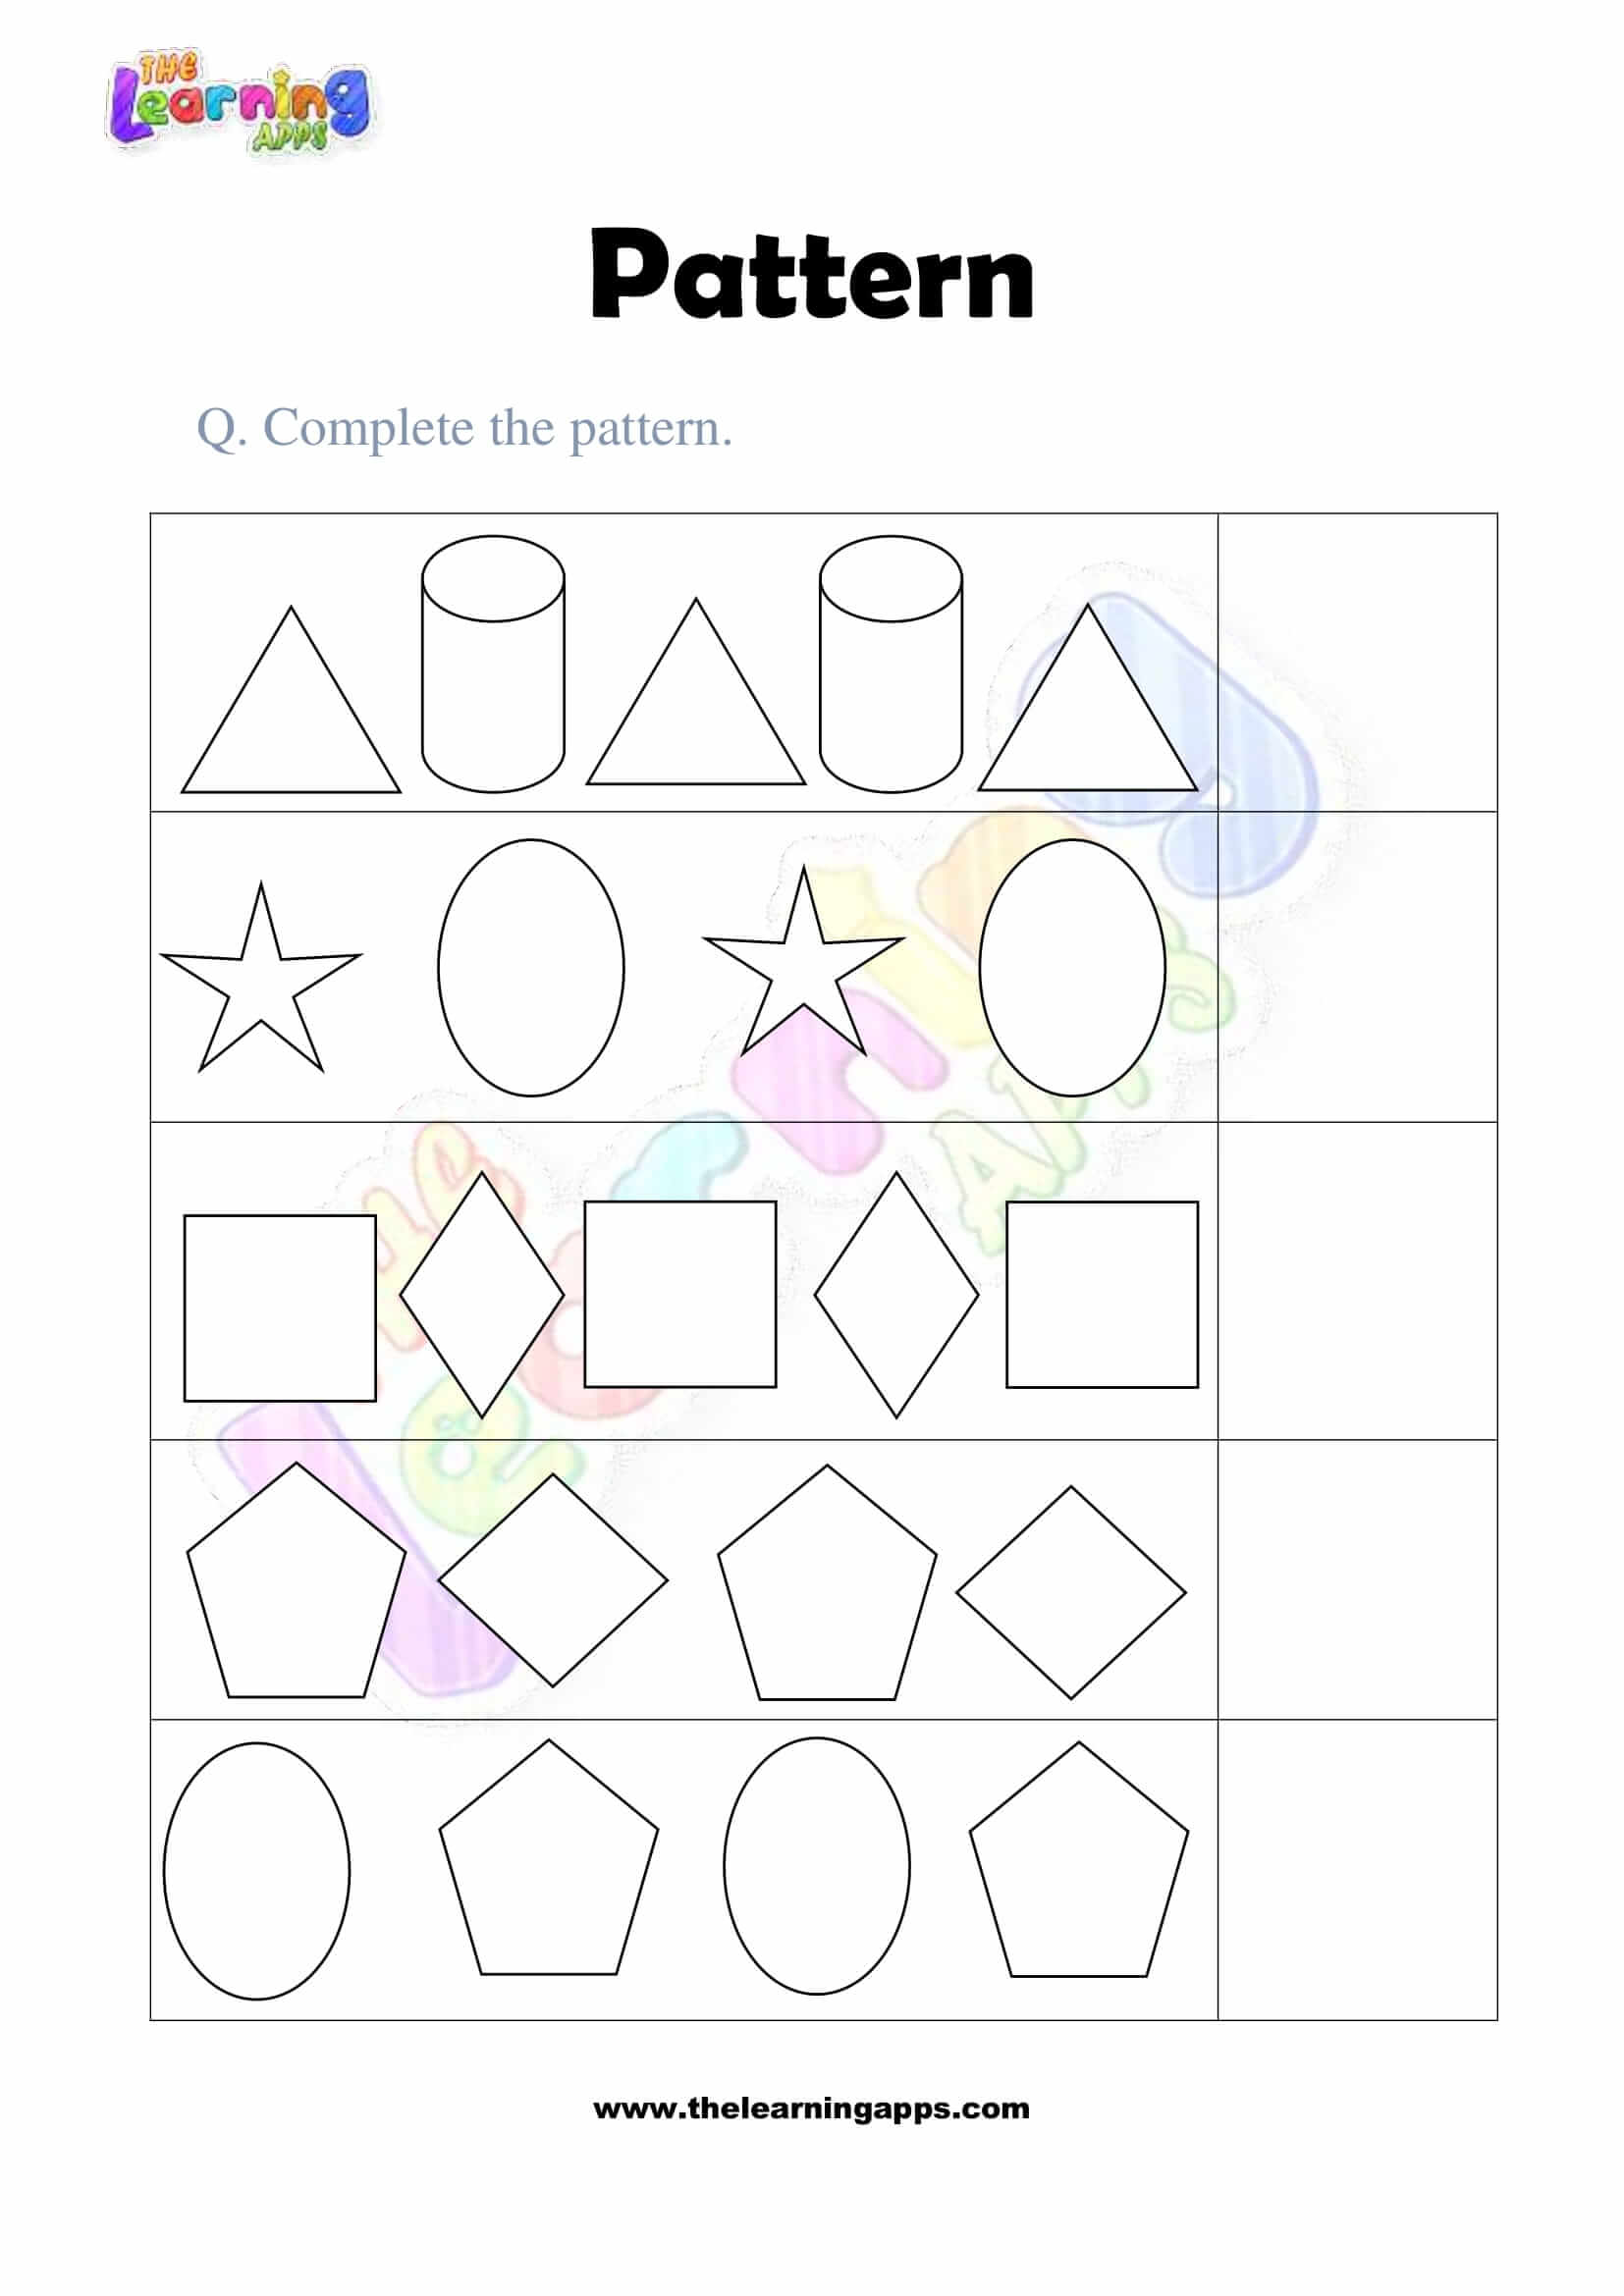 Pattern Worksheet - Grade 2 - Activity 4